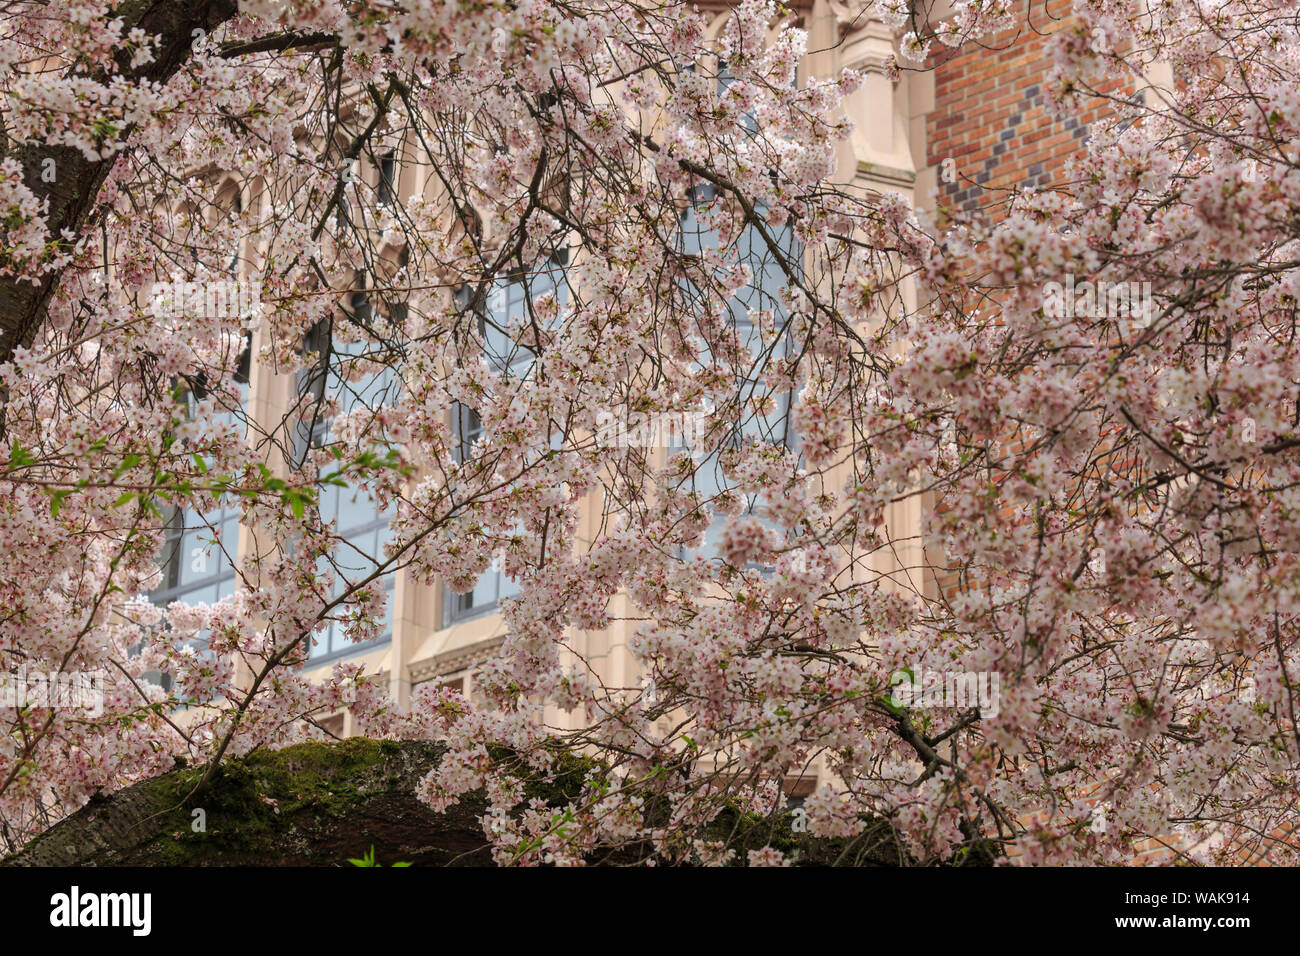 Cherry blossoms in full bloom at University of Washington campus, Seattle, Washington State, USA Stock Photo